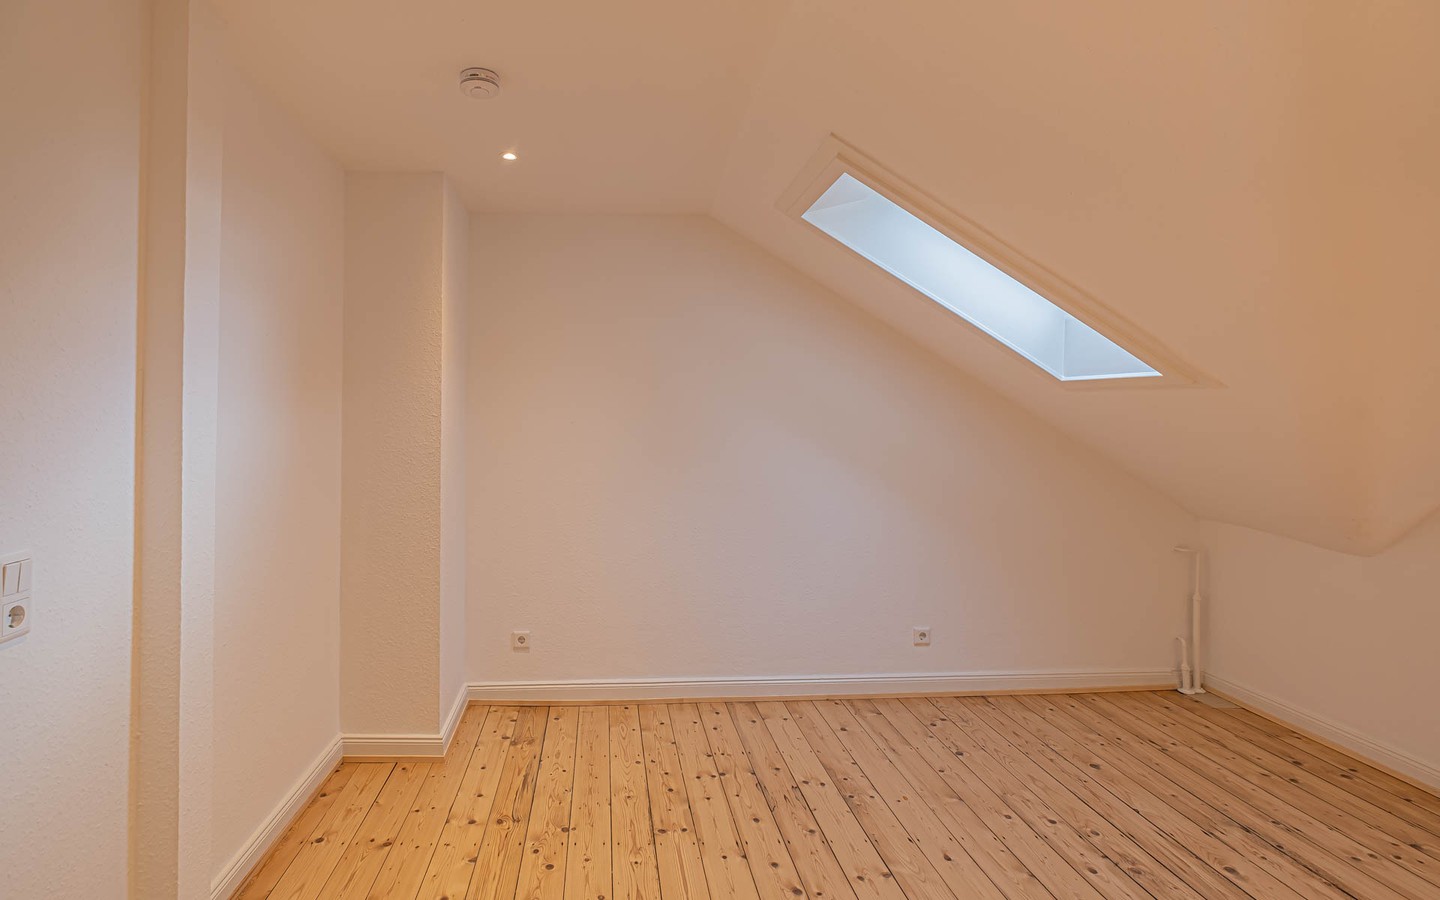 Schlafzimmer - Rarität – Dachgeschosswohnung mit Schlossblick -
 Ideal für kreative Singles oder Paare